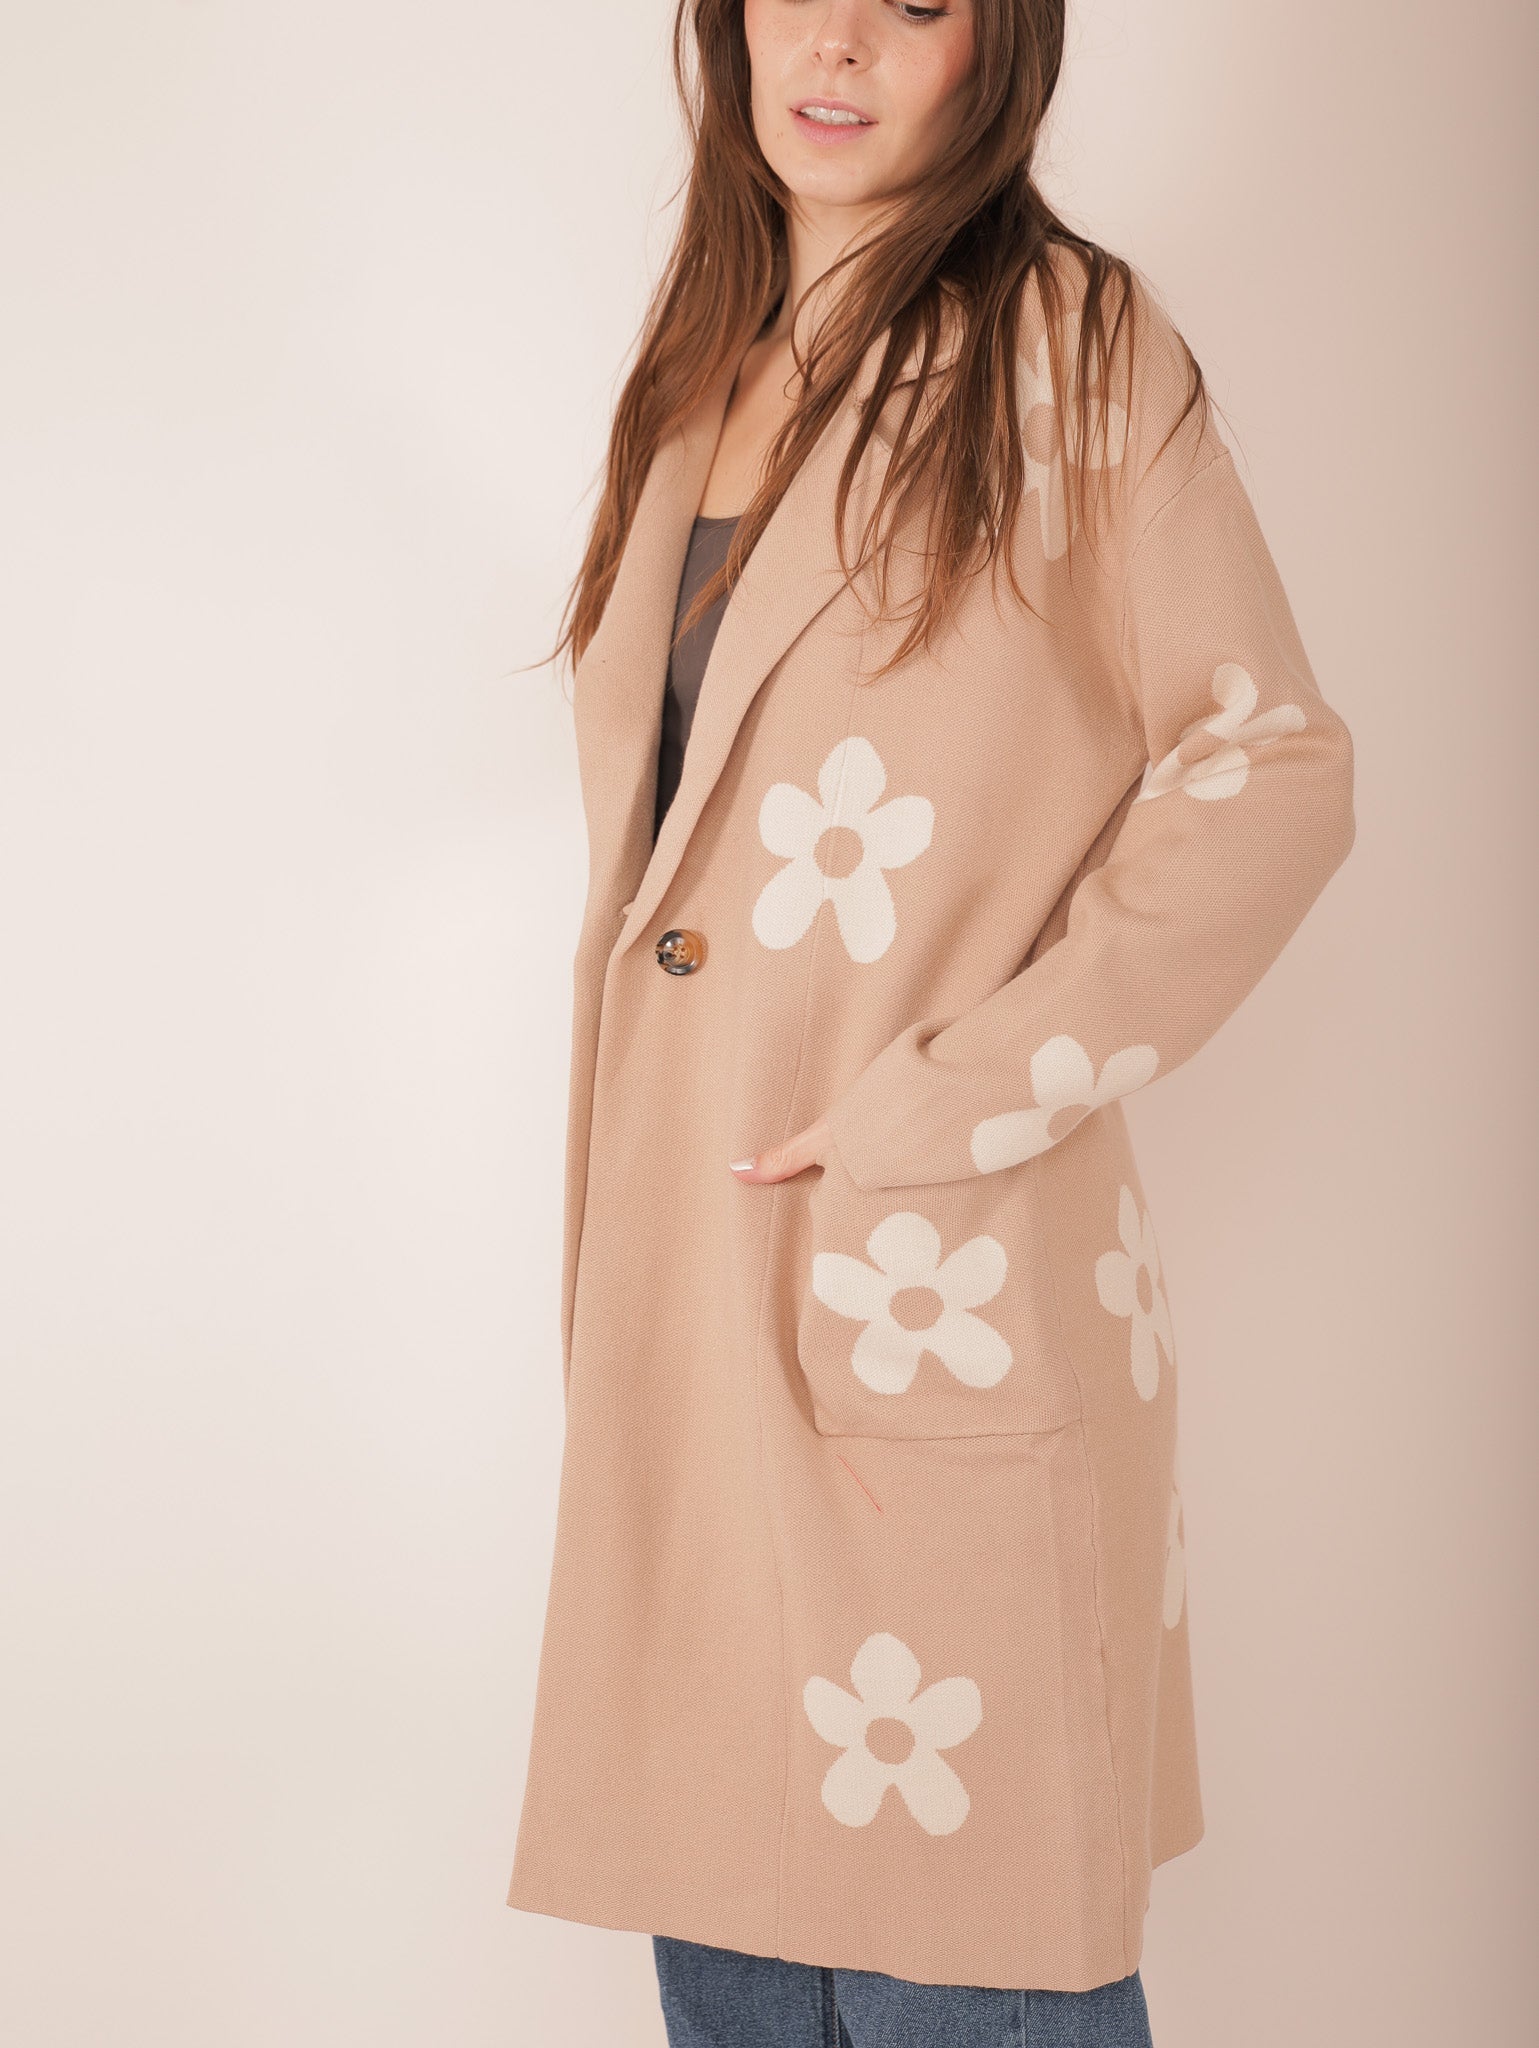 Molly Green - Adrianne Flower Blazer - Outerwear